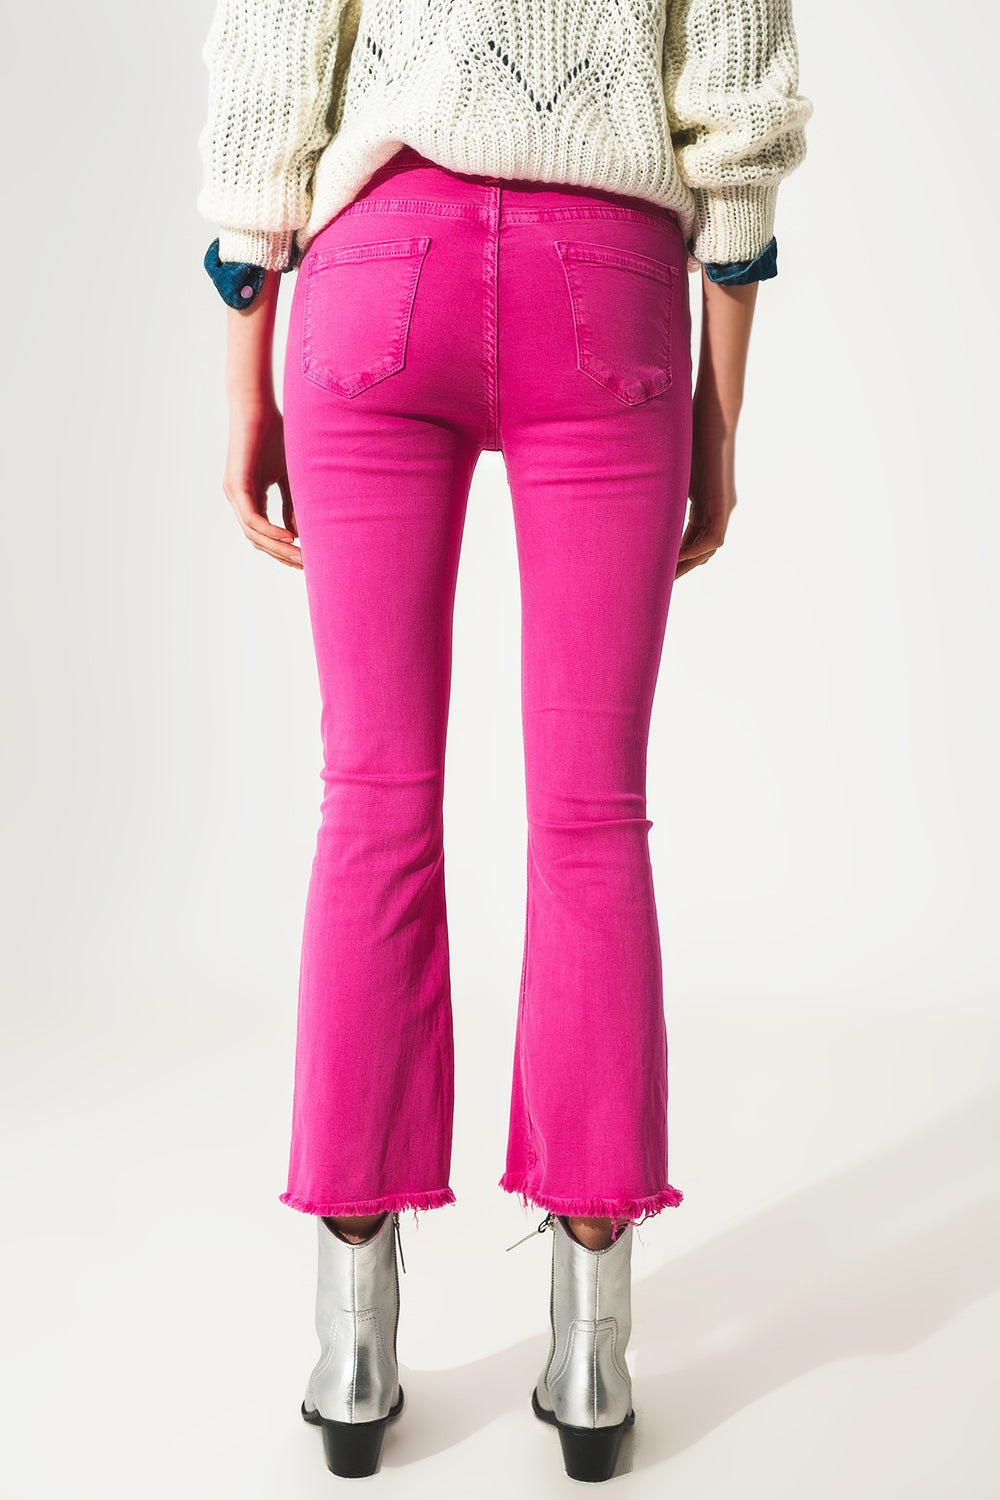 Flare jeans with raw hem edge in fuchsia - Szua Store